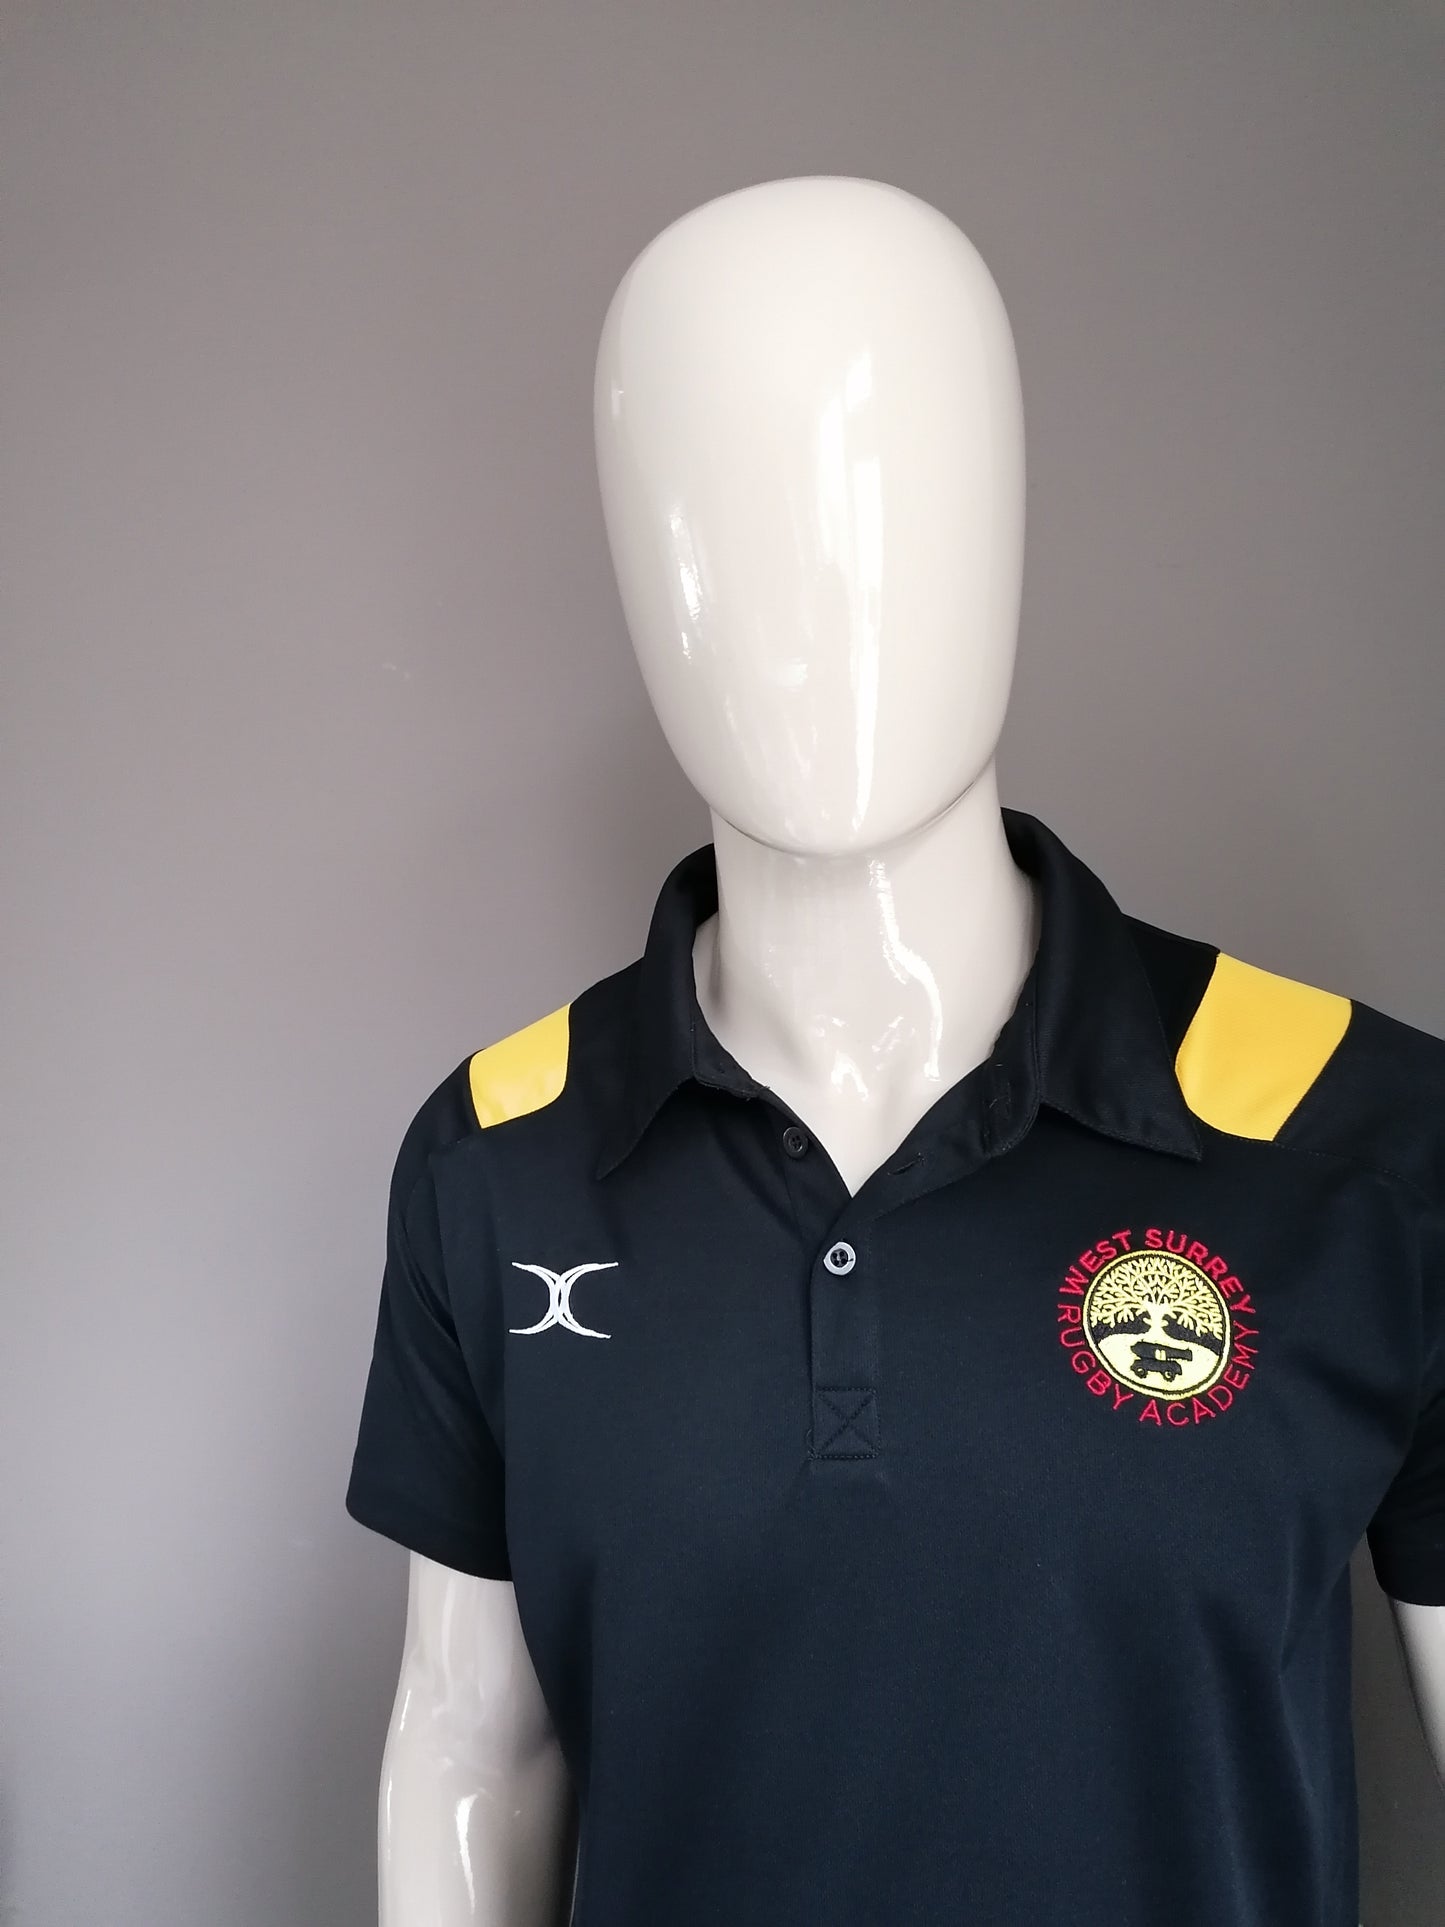 West Surrey Rugby Academy sport polo. Zwart Geel gekleurd. Maat L.